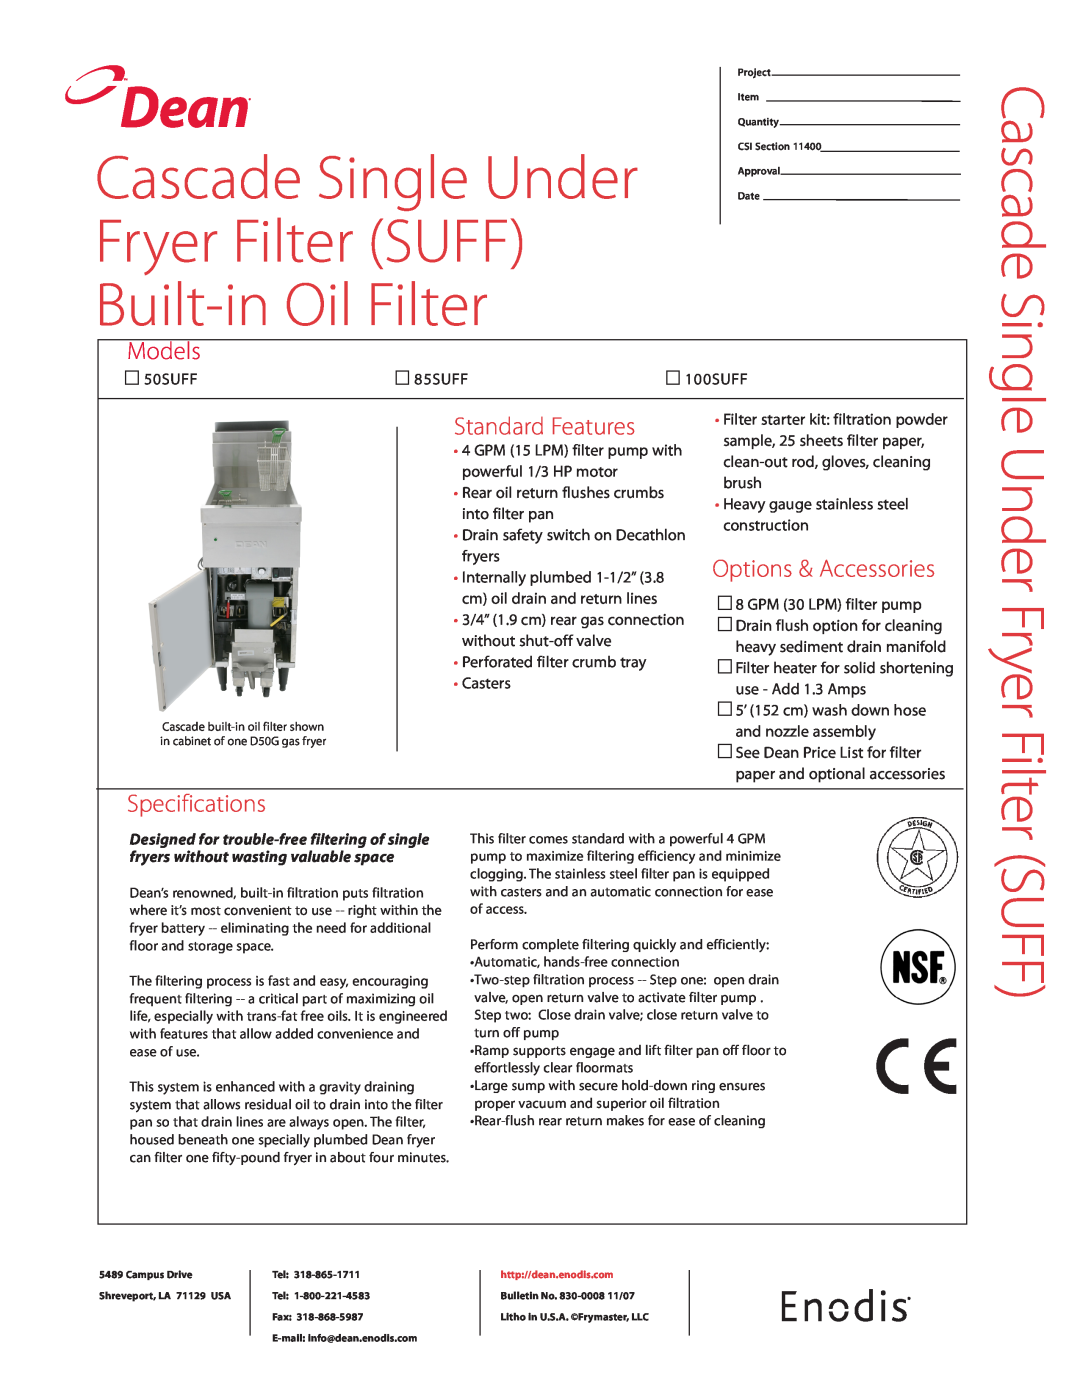 Teac specifications Cascade Single Under Fryer Filter SUFF Built-in Oil Filter, Suff, Dean, Models, Standard Features 